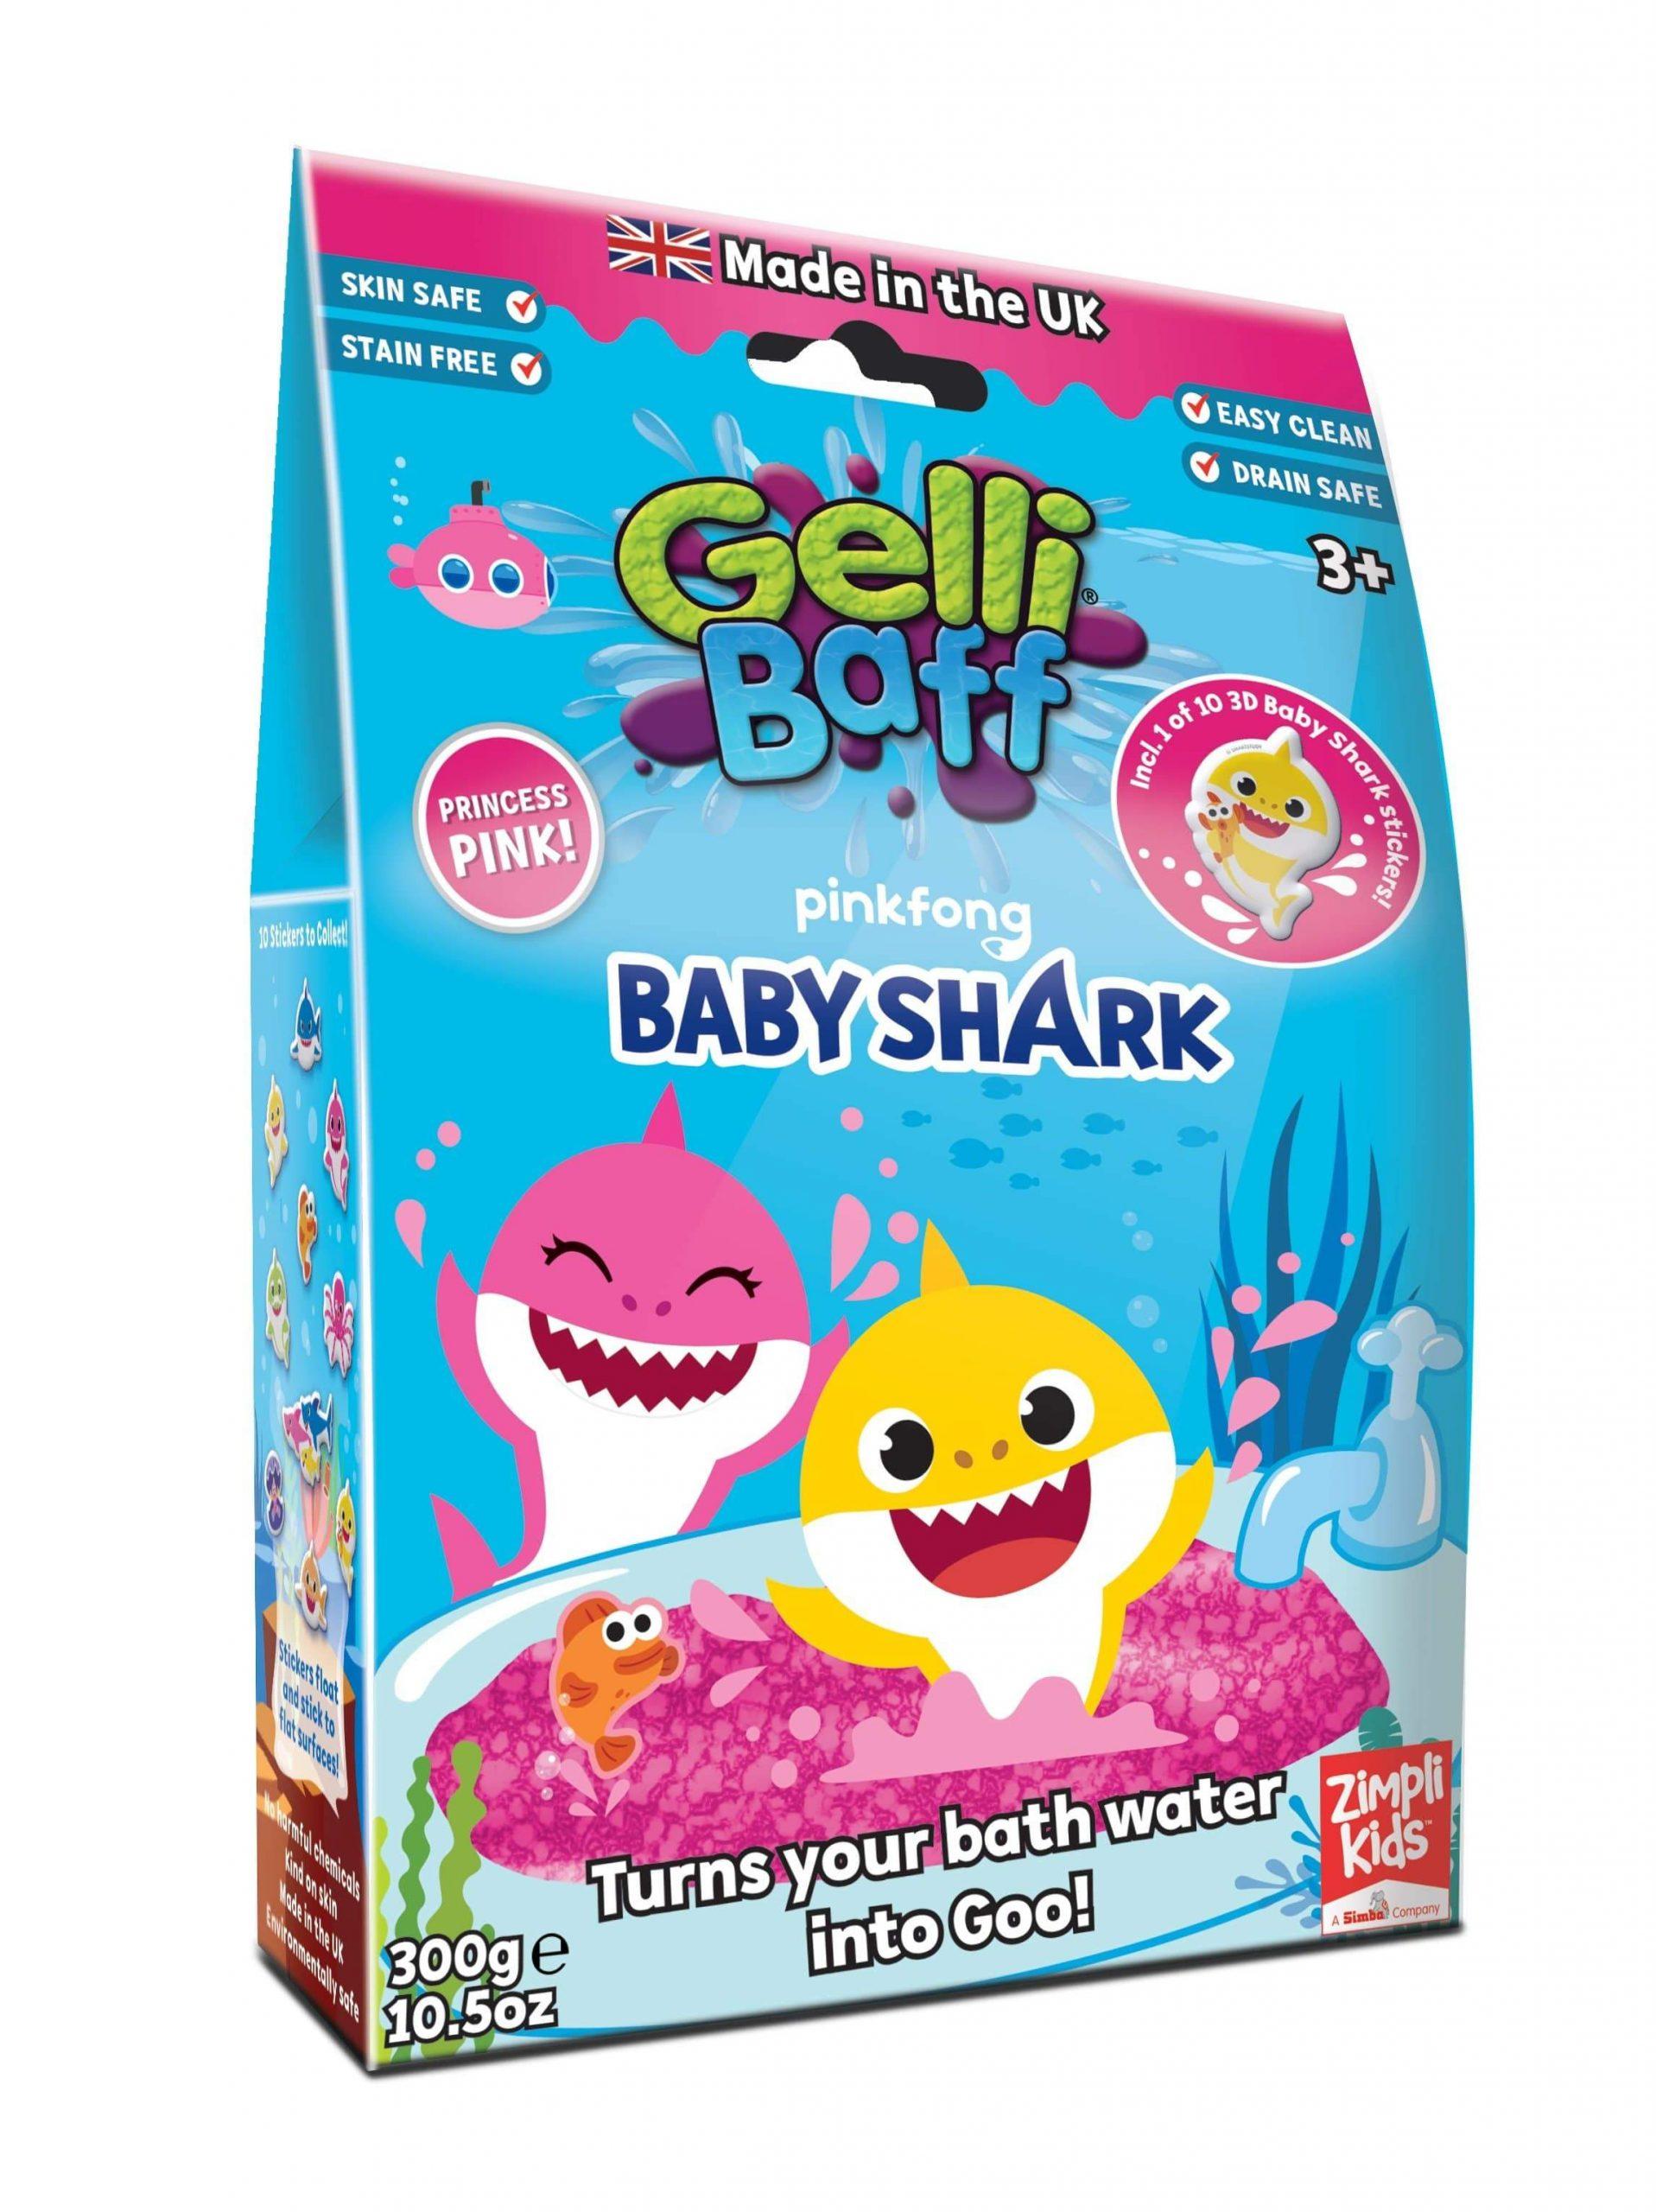 glibbi-Zimpli kids baby shark gelli baff pink 300g